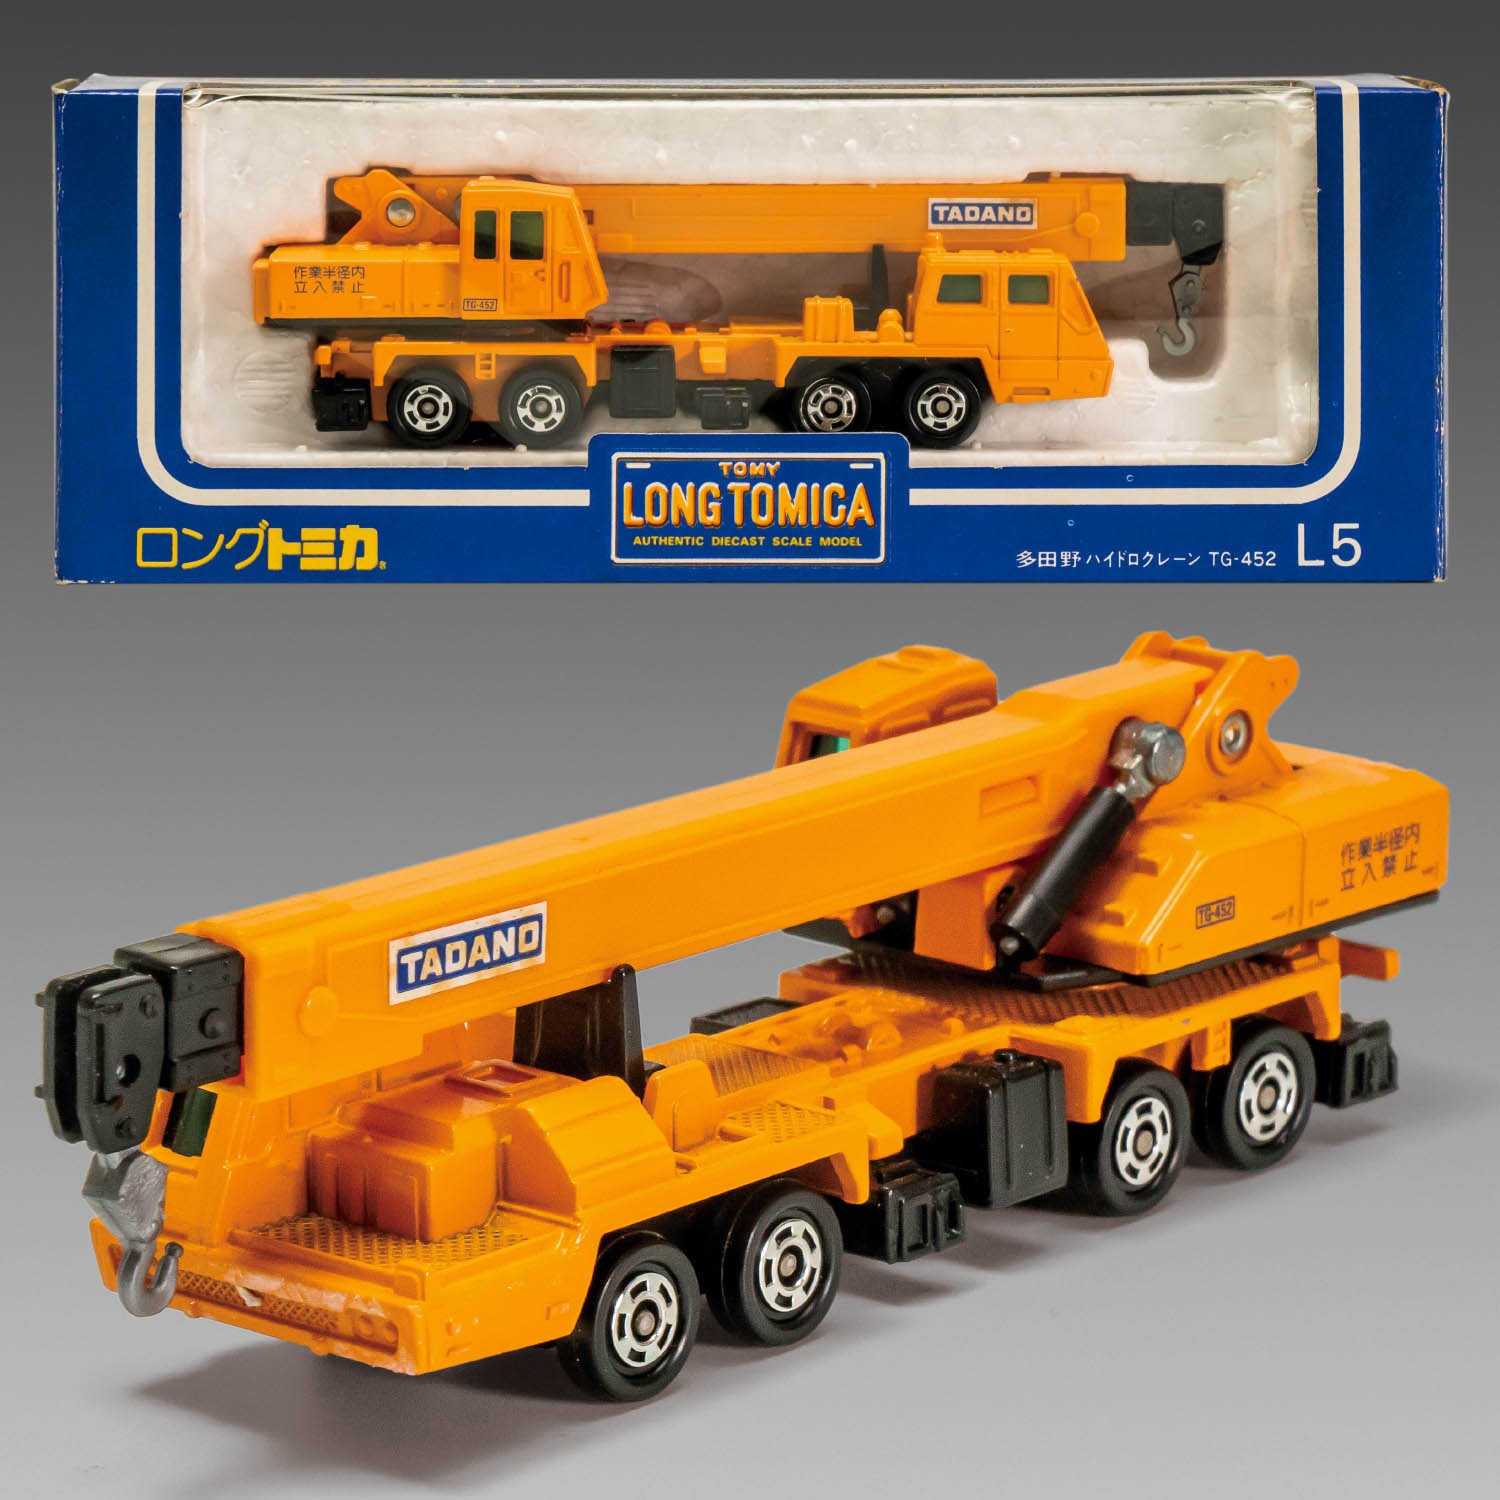 Long Tomica Tadano Hydro Crane TG-452 (Yellow)